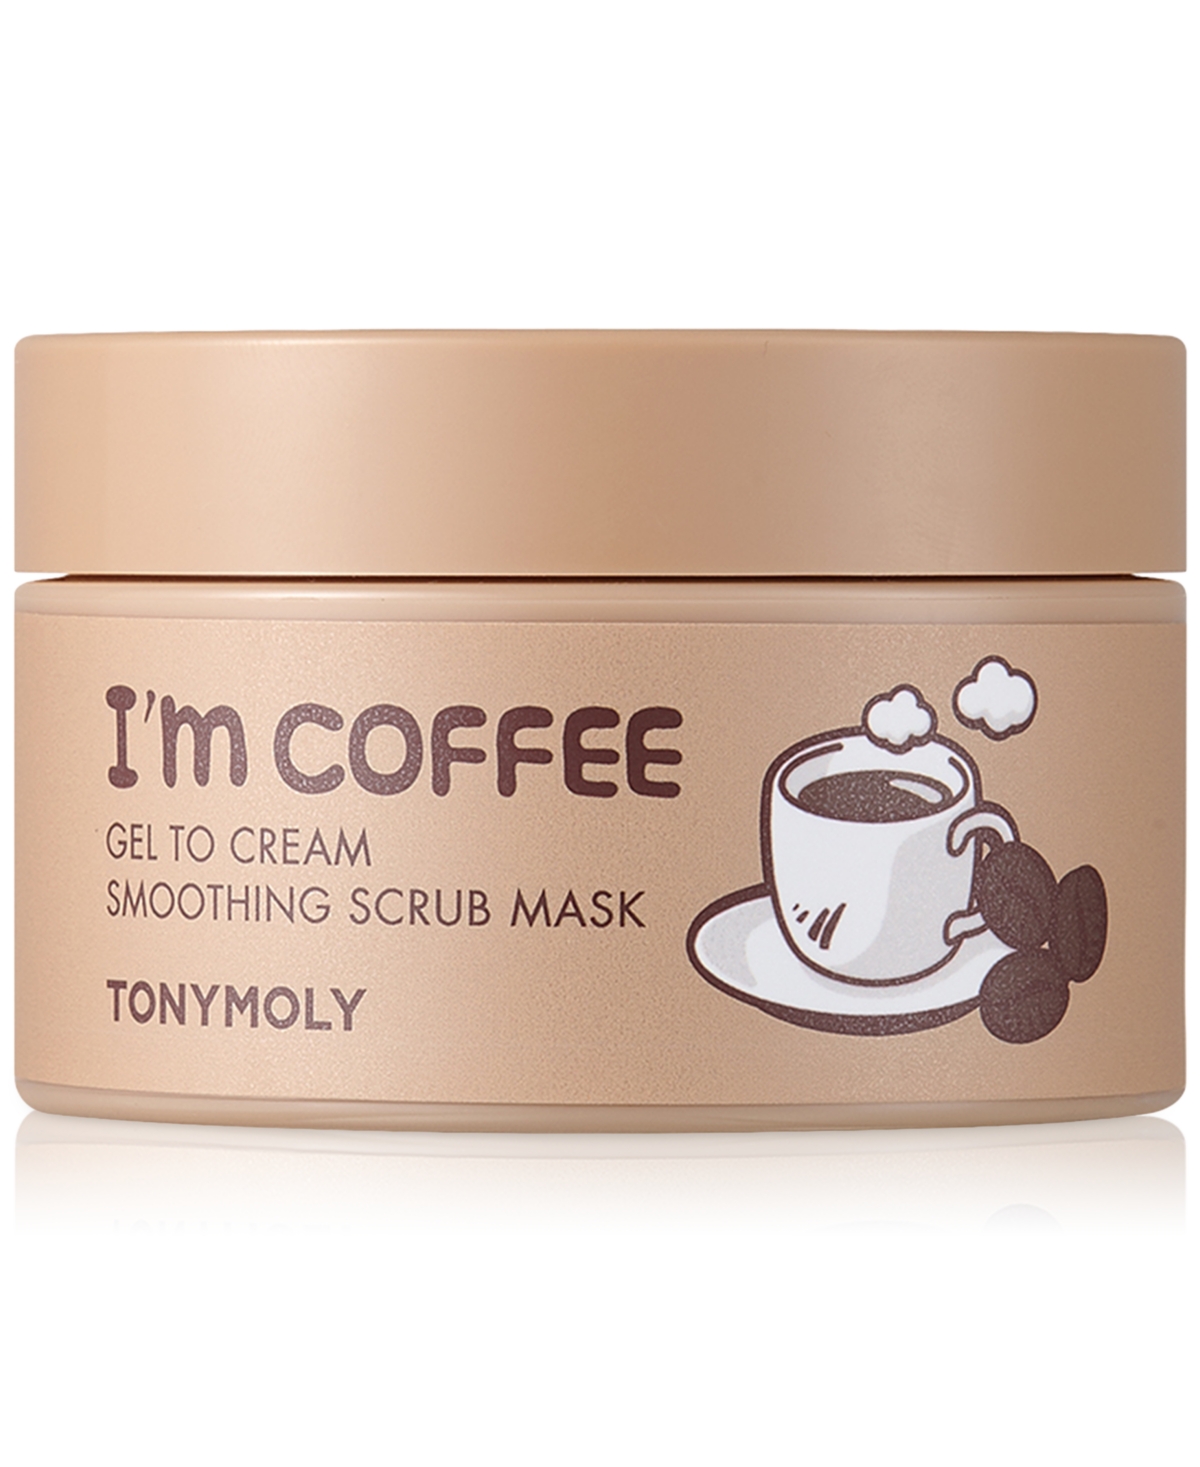 Tonymoly I'm Coffee Gel To Cream Smoothing Scrub Mask In Light Brown